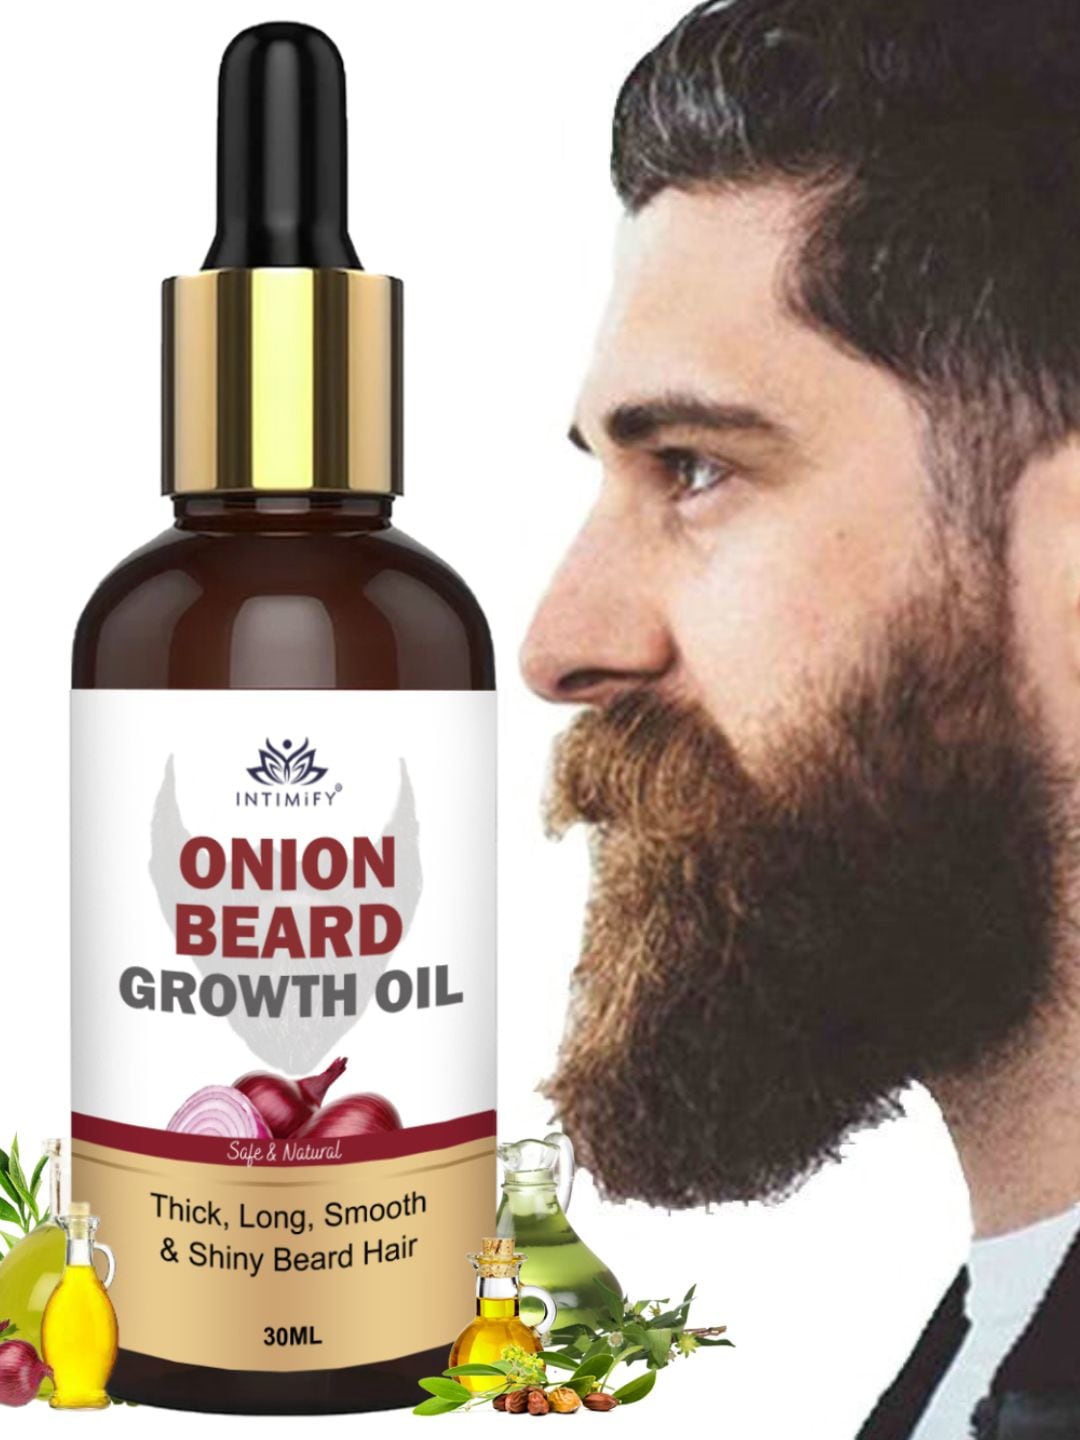 

INTIMIFY Onion Beard Growth Oil With Jojoba & Tea Tree Oil - 30ml, Transparent